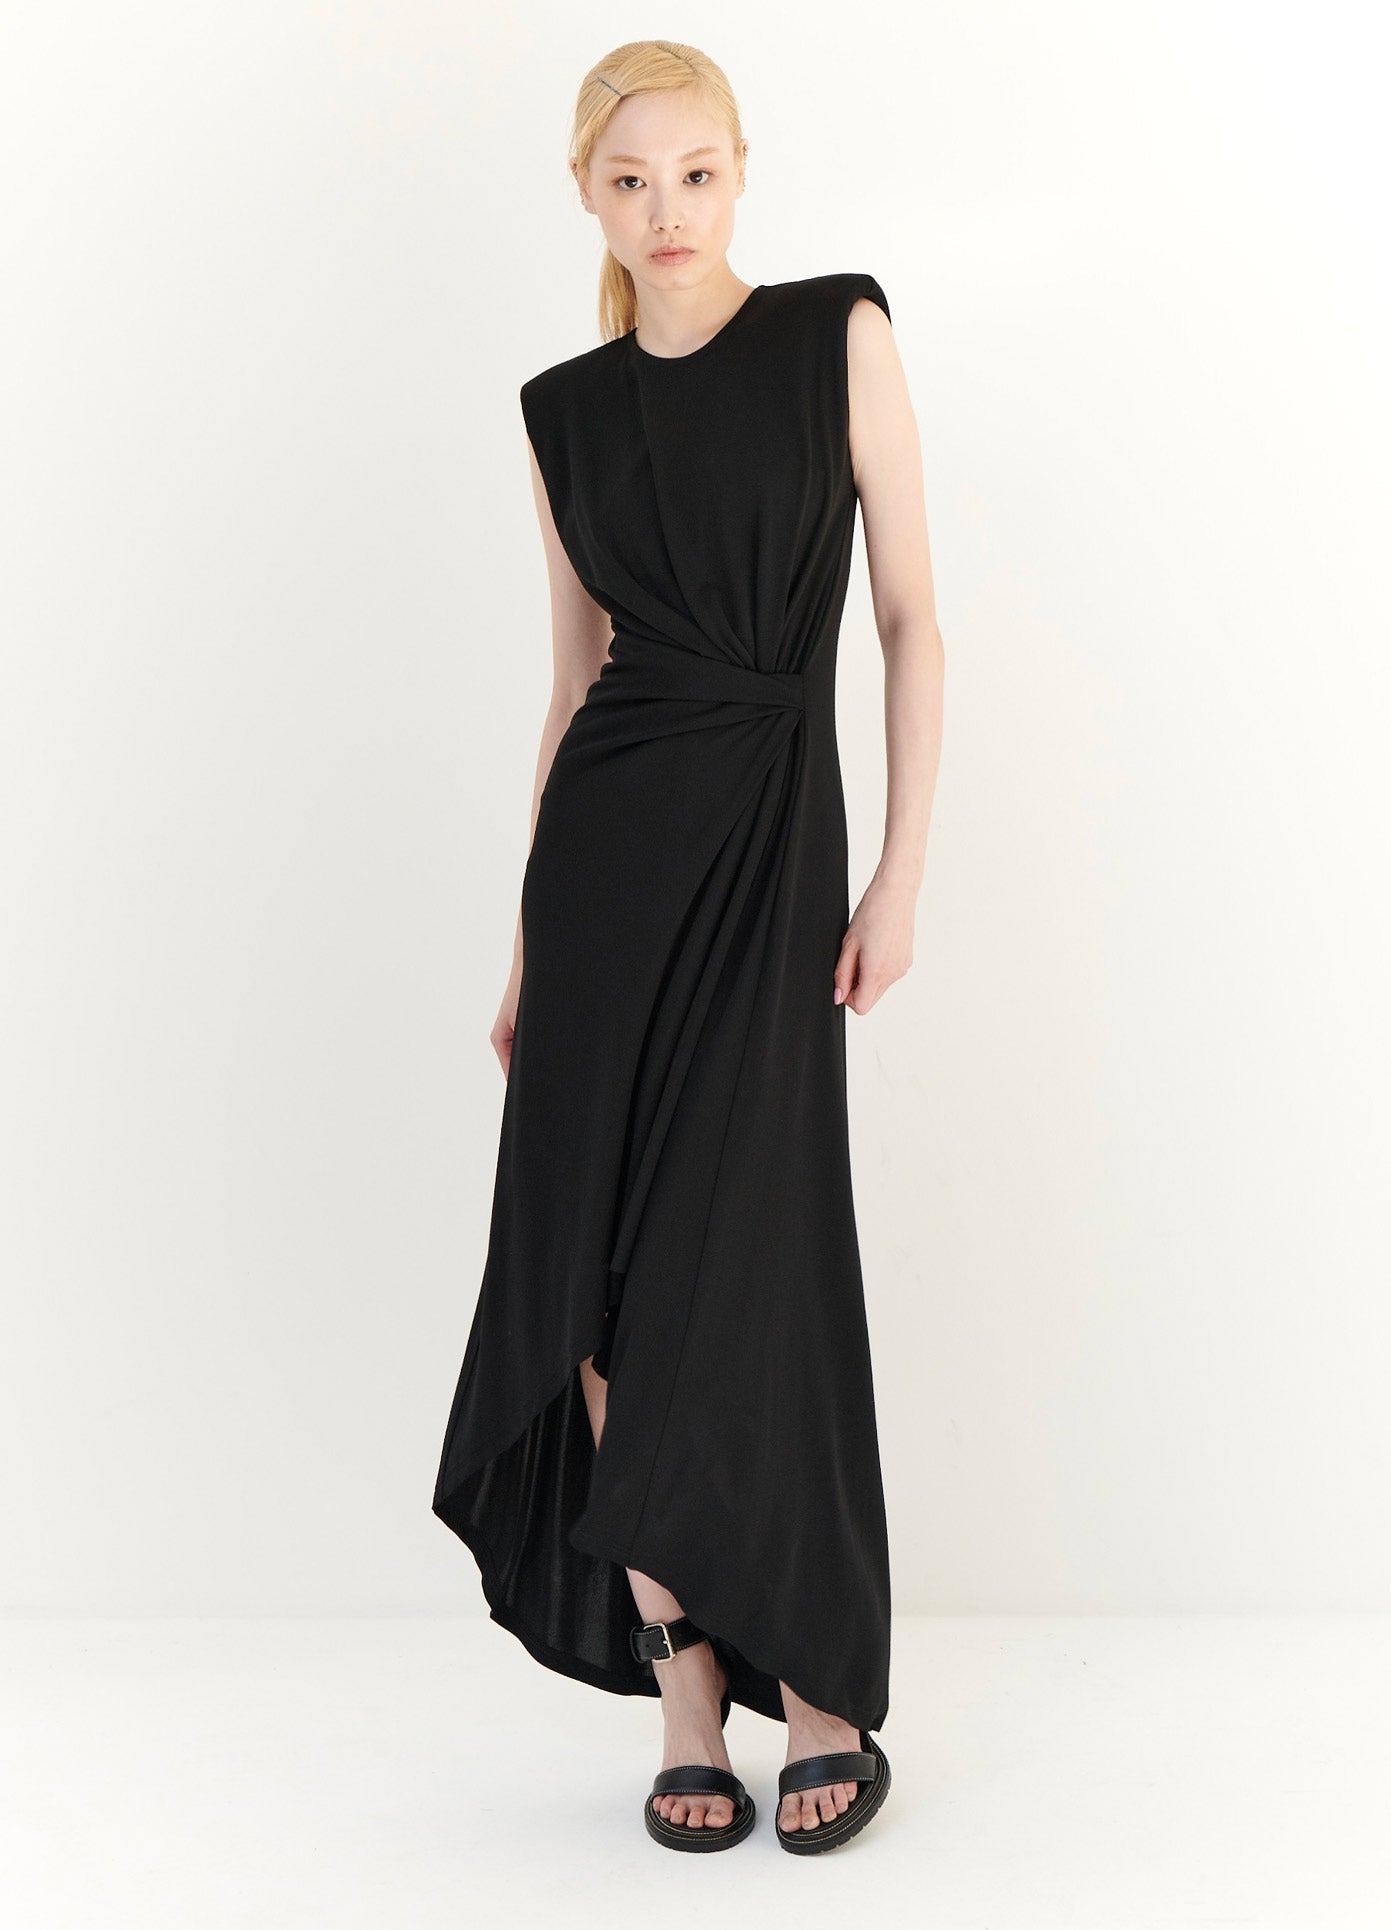 MONSE Gathered Power Shoulder Dress in Black on Model Full Front View